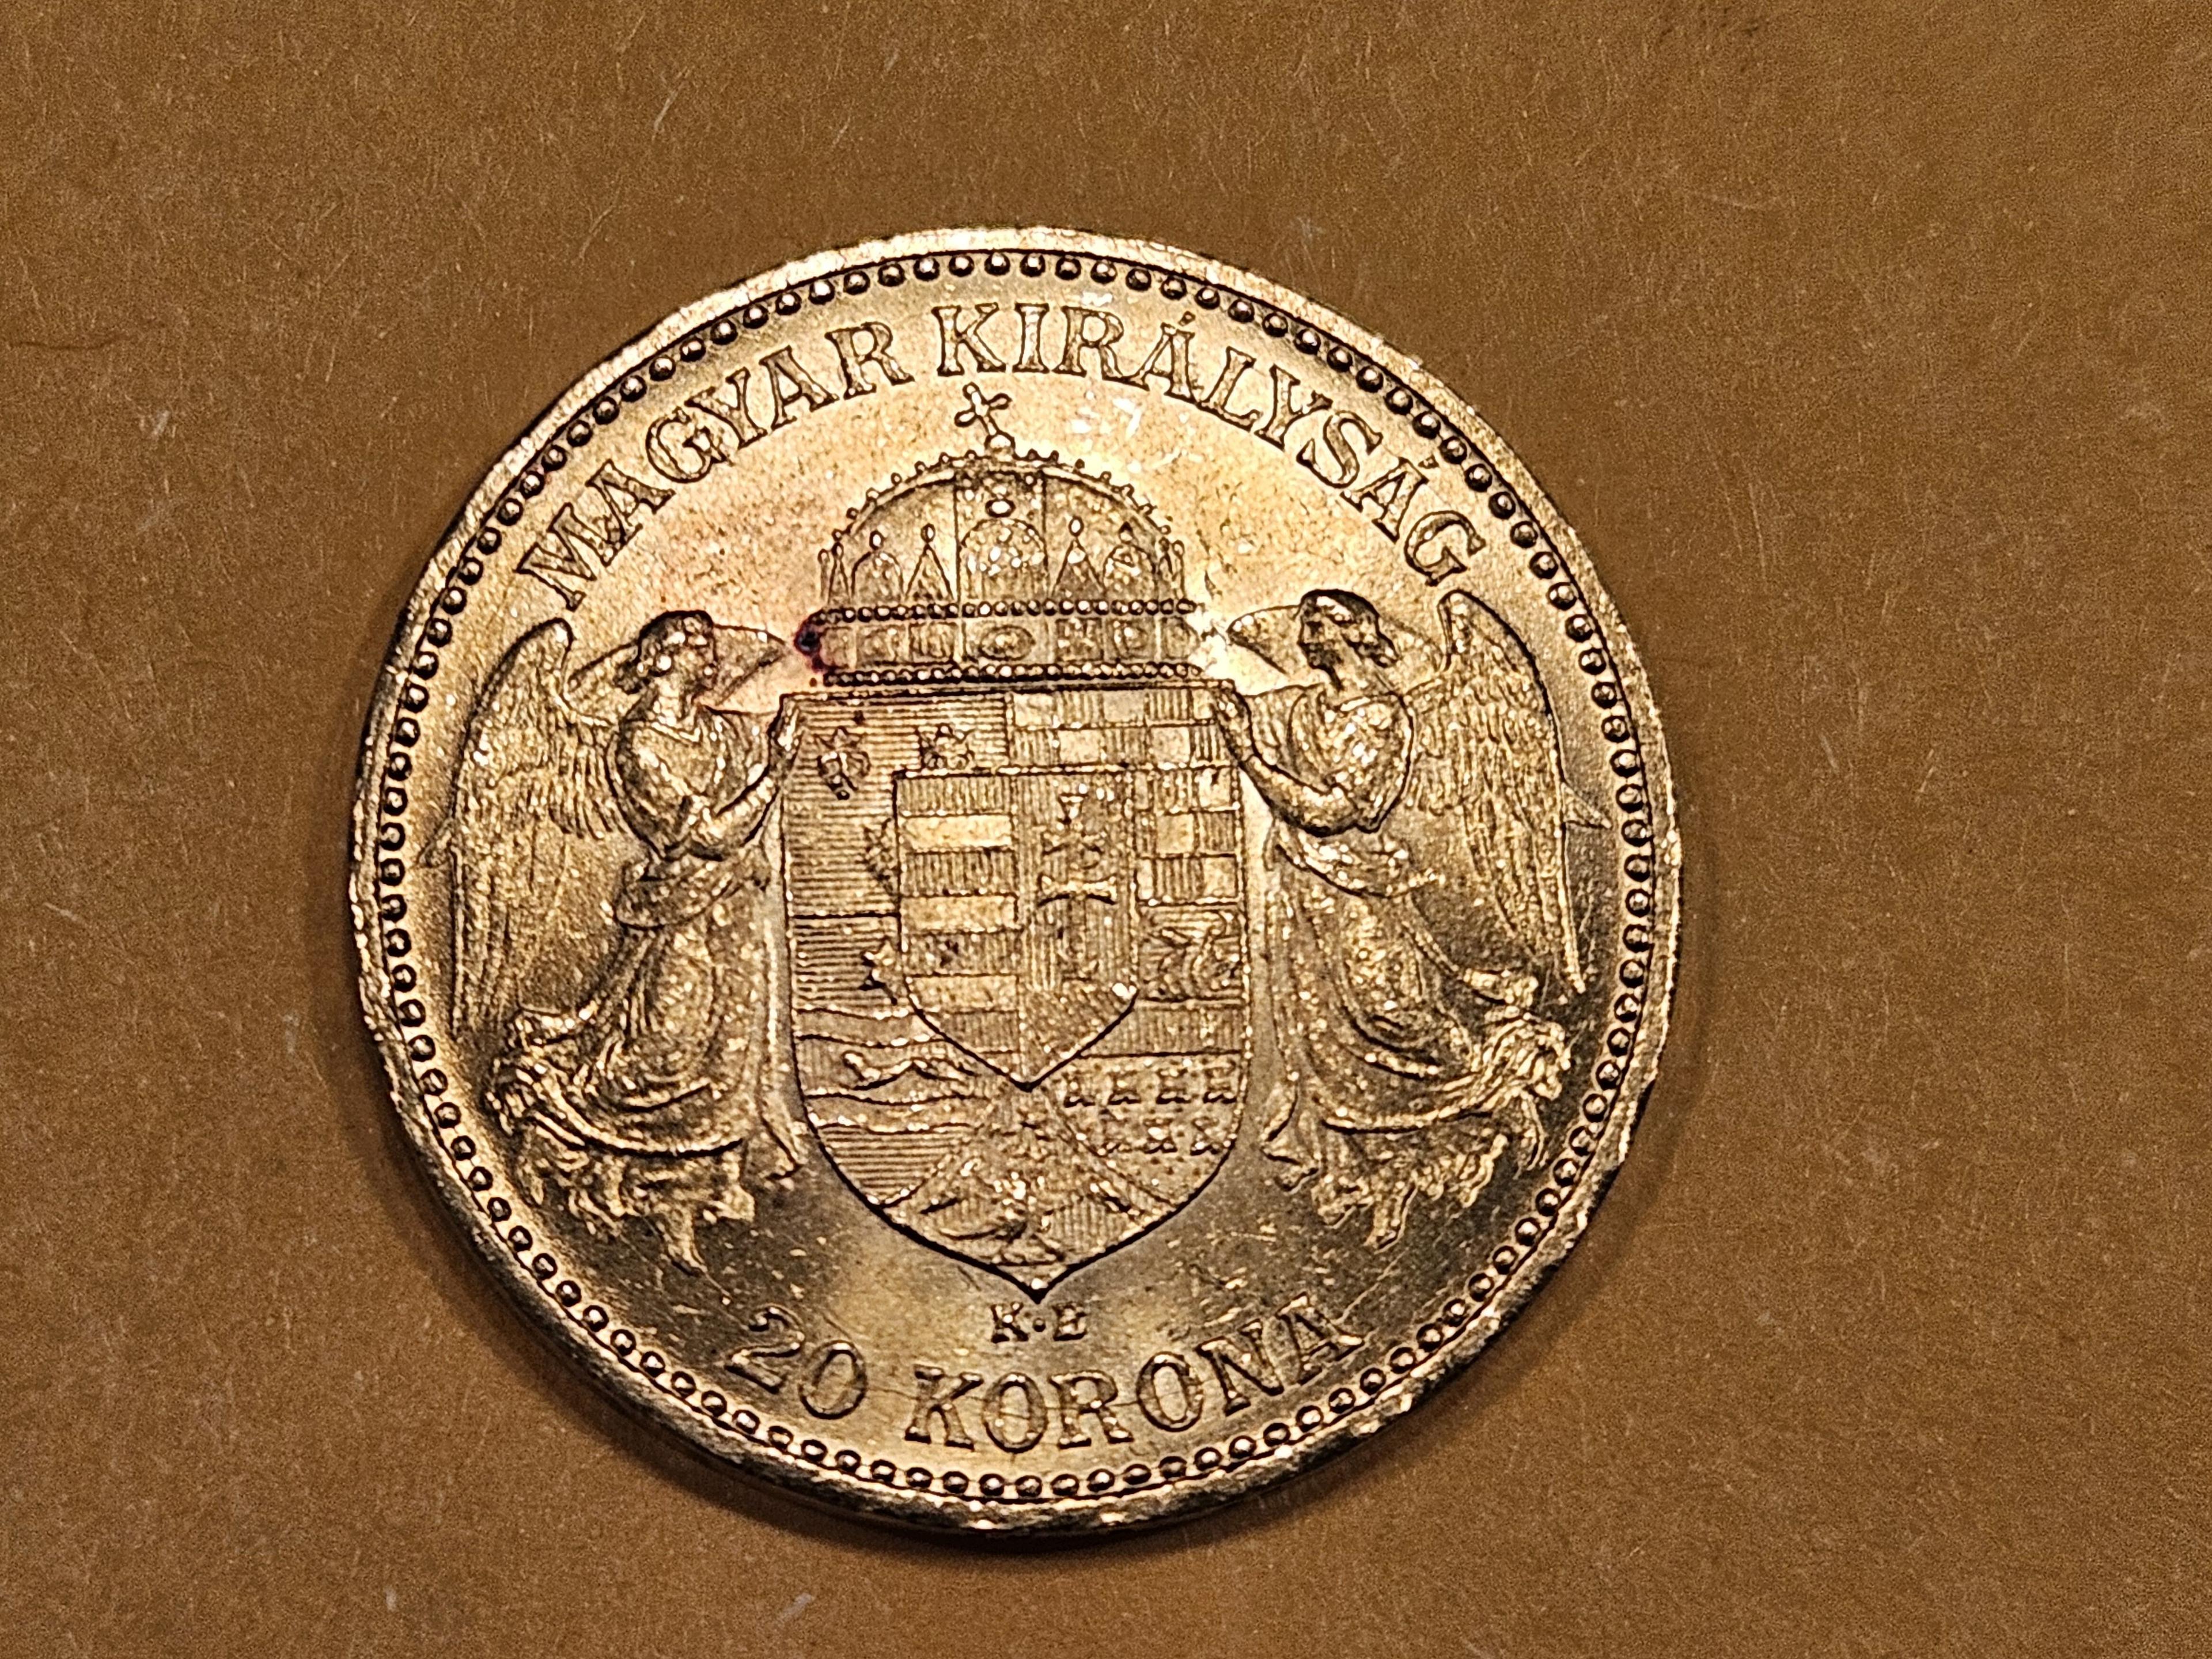 GOLD! Very Choice to GEM Brilliant uncirculated 1893 Hungary 20 korona